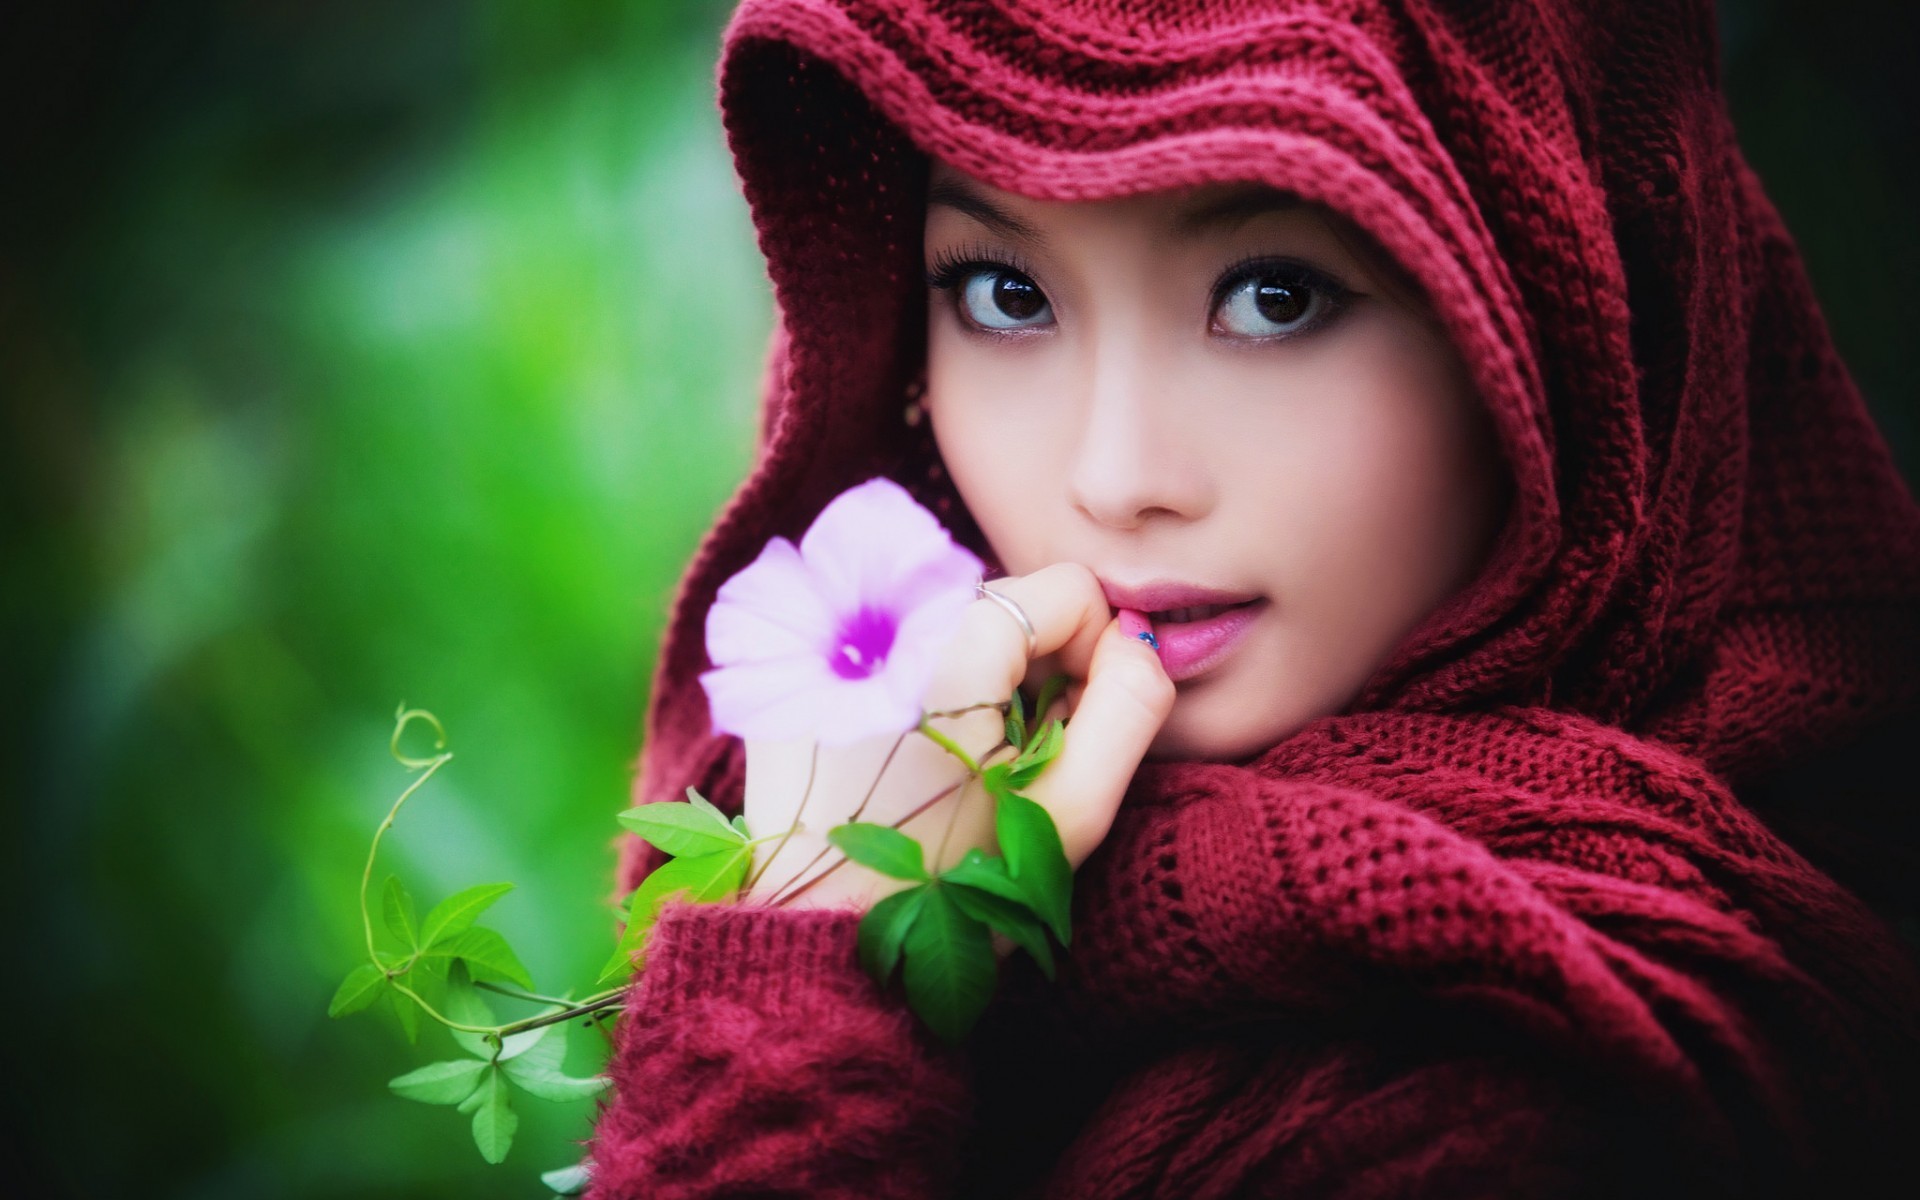 Women Model Women Outdoors Asian Looking At Viewer Brown Eyes Flowers Hoods Sweater Leaves Face Biti 1920x1200